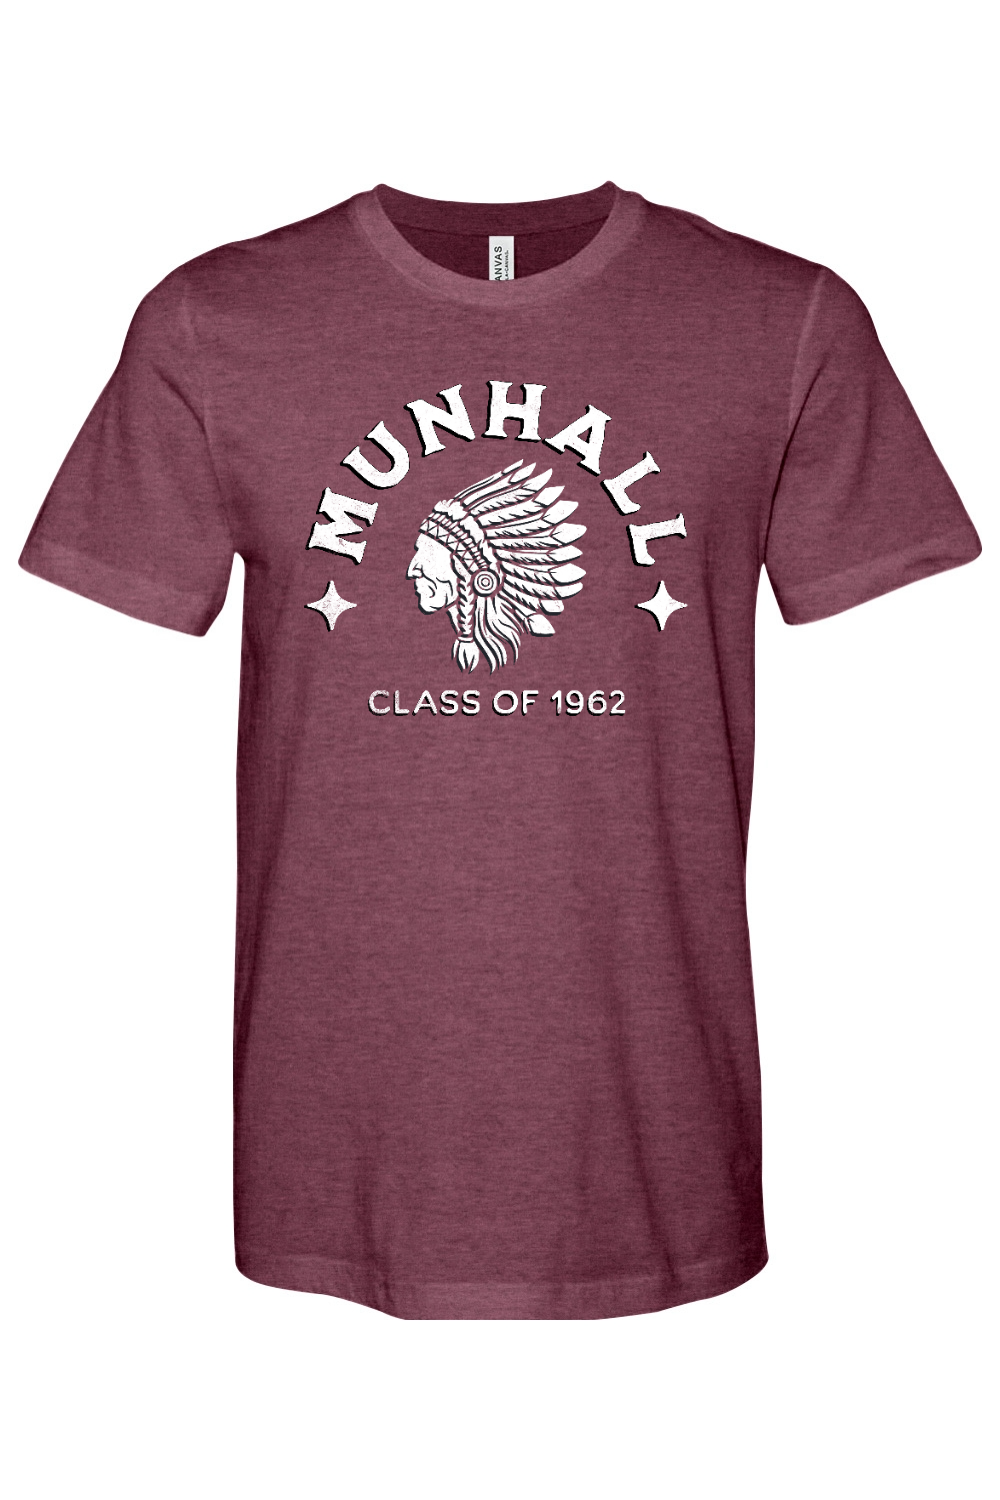 Munhall - Class of 1962 - Yinzylvania